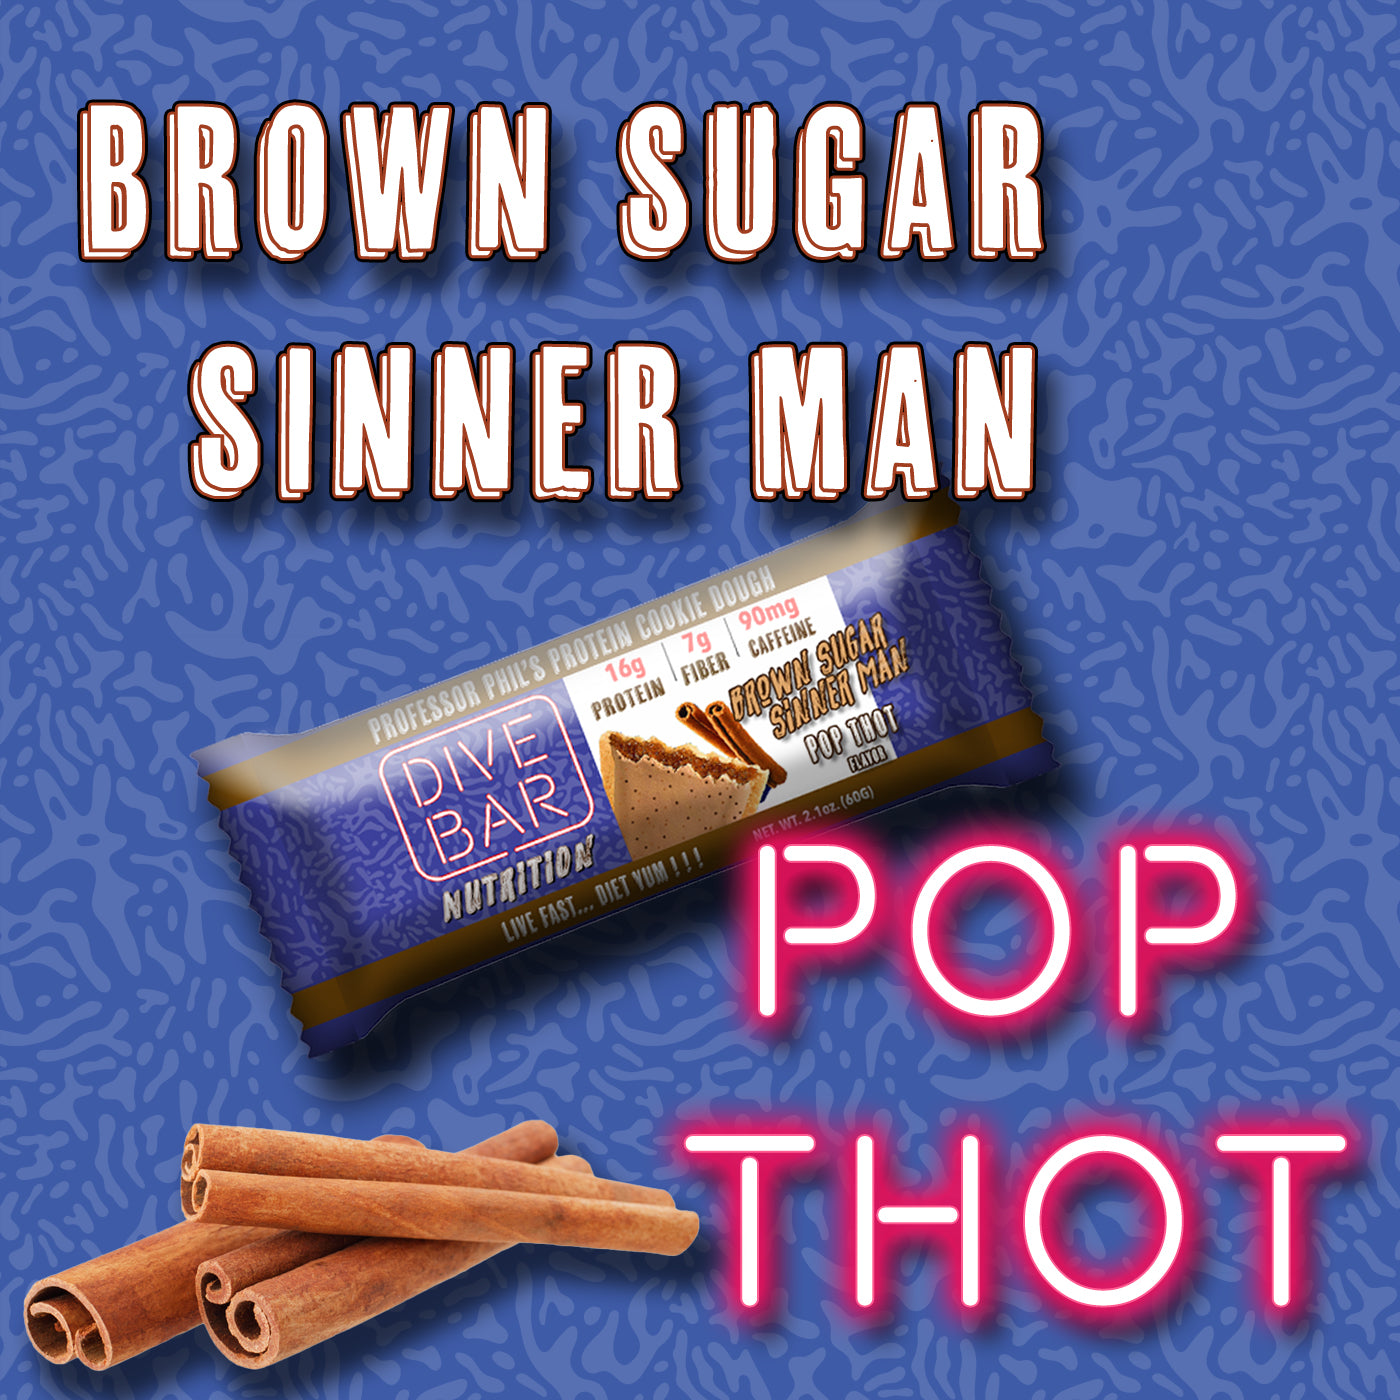 Brown Shuga POP THOT - 6 bars